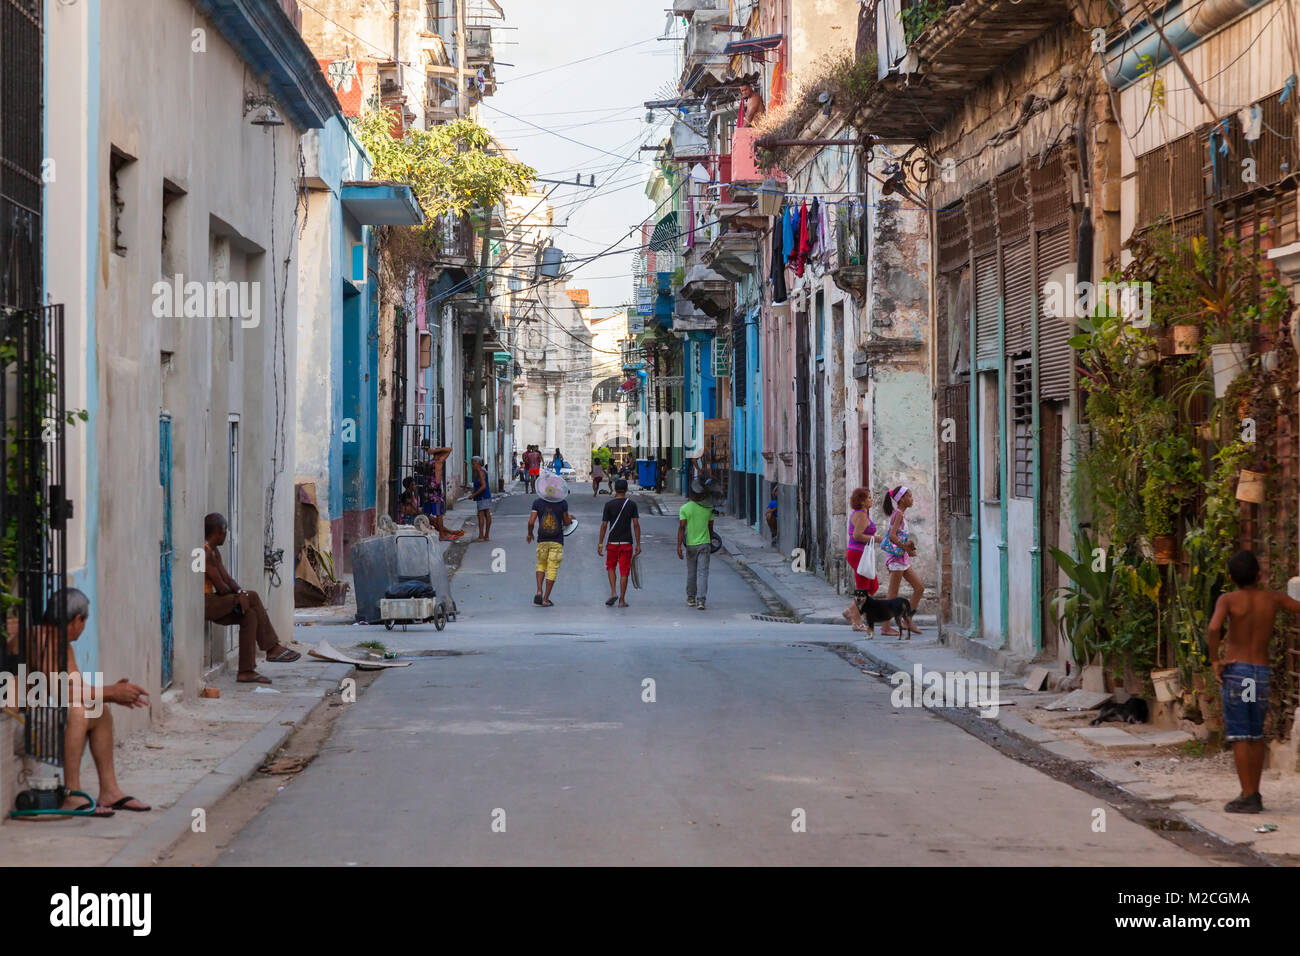 Una típica escena callejera en La Habana, Cuba. Foto de stock